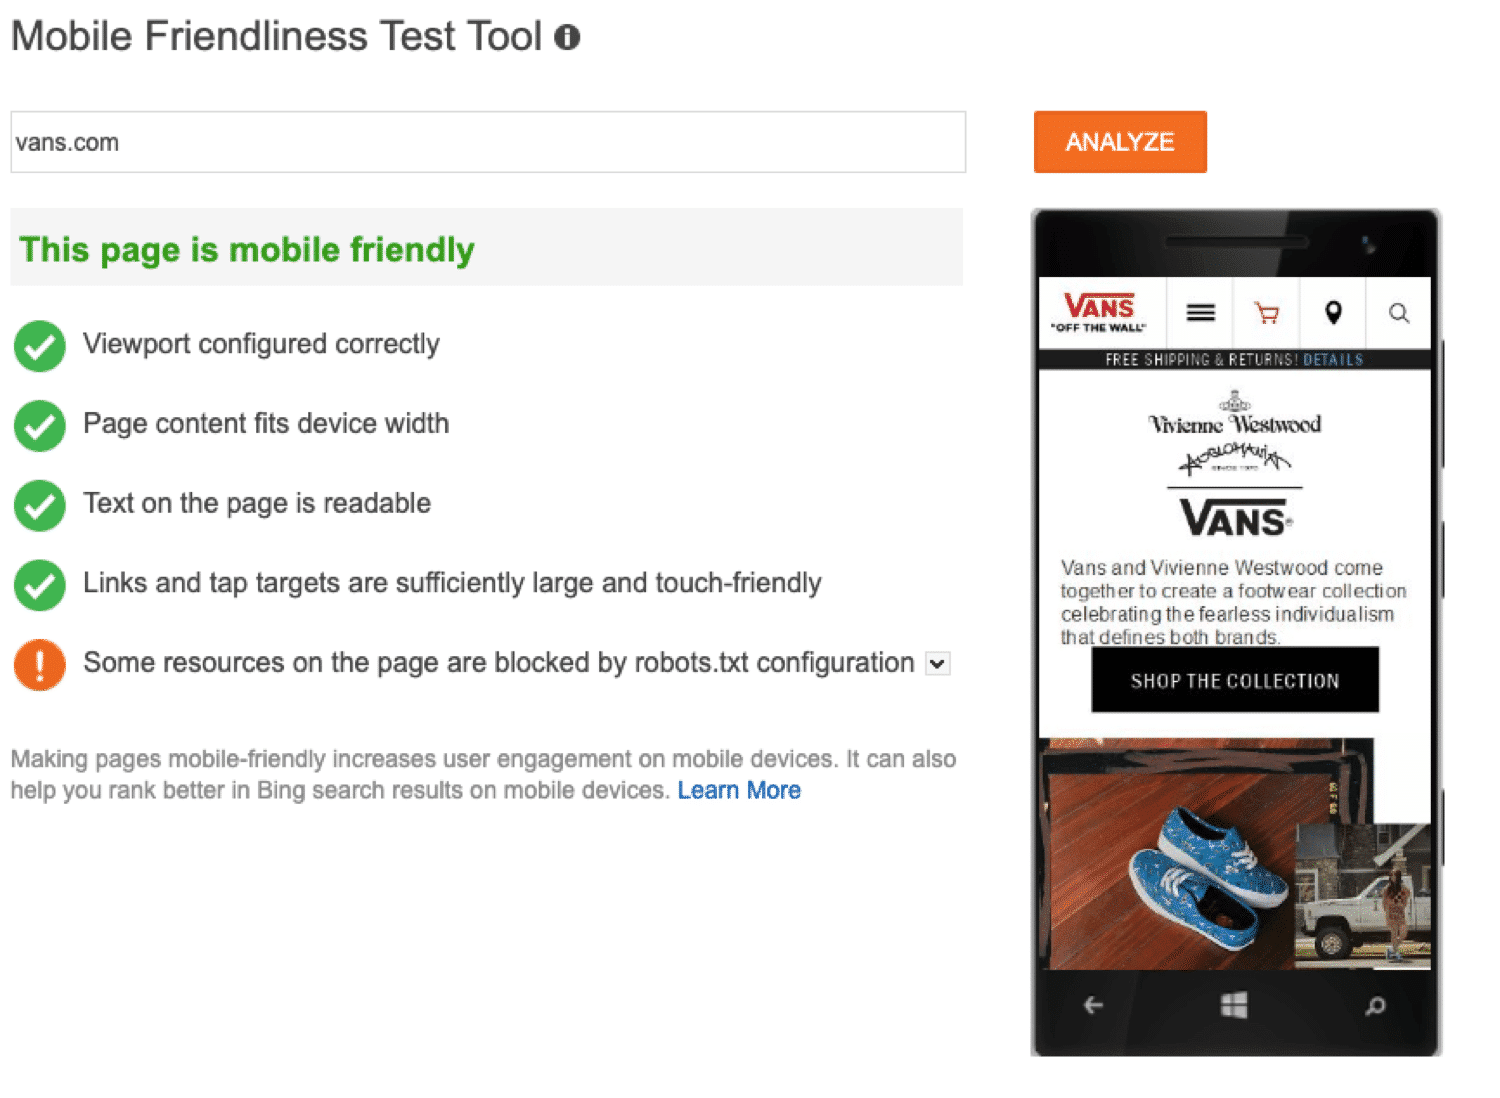 Bing's mobile friendliness test tool